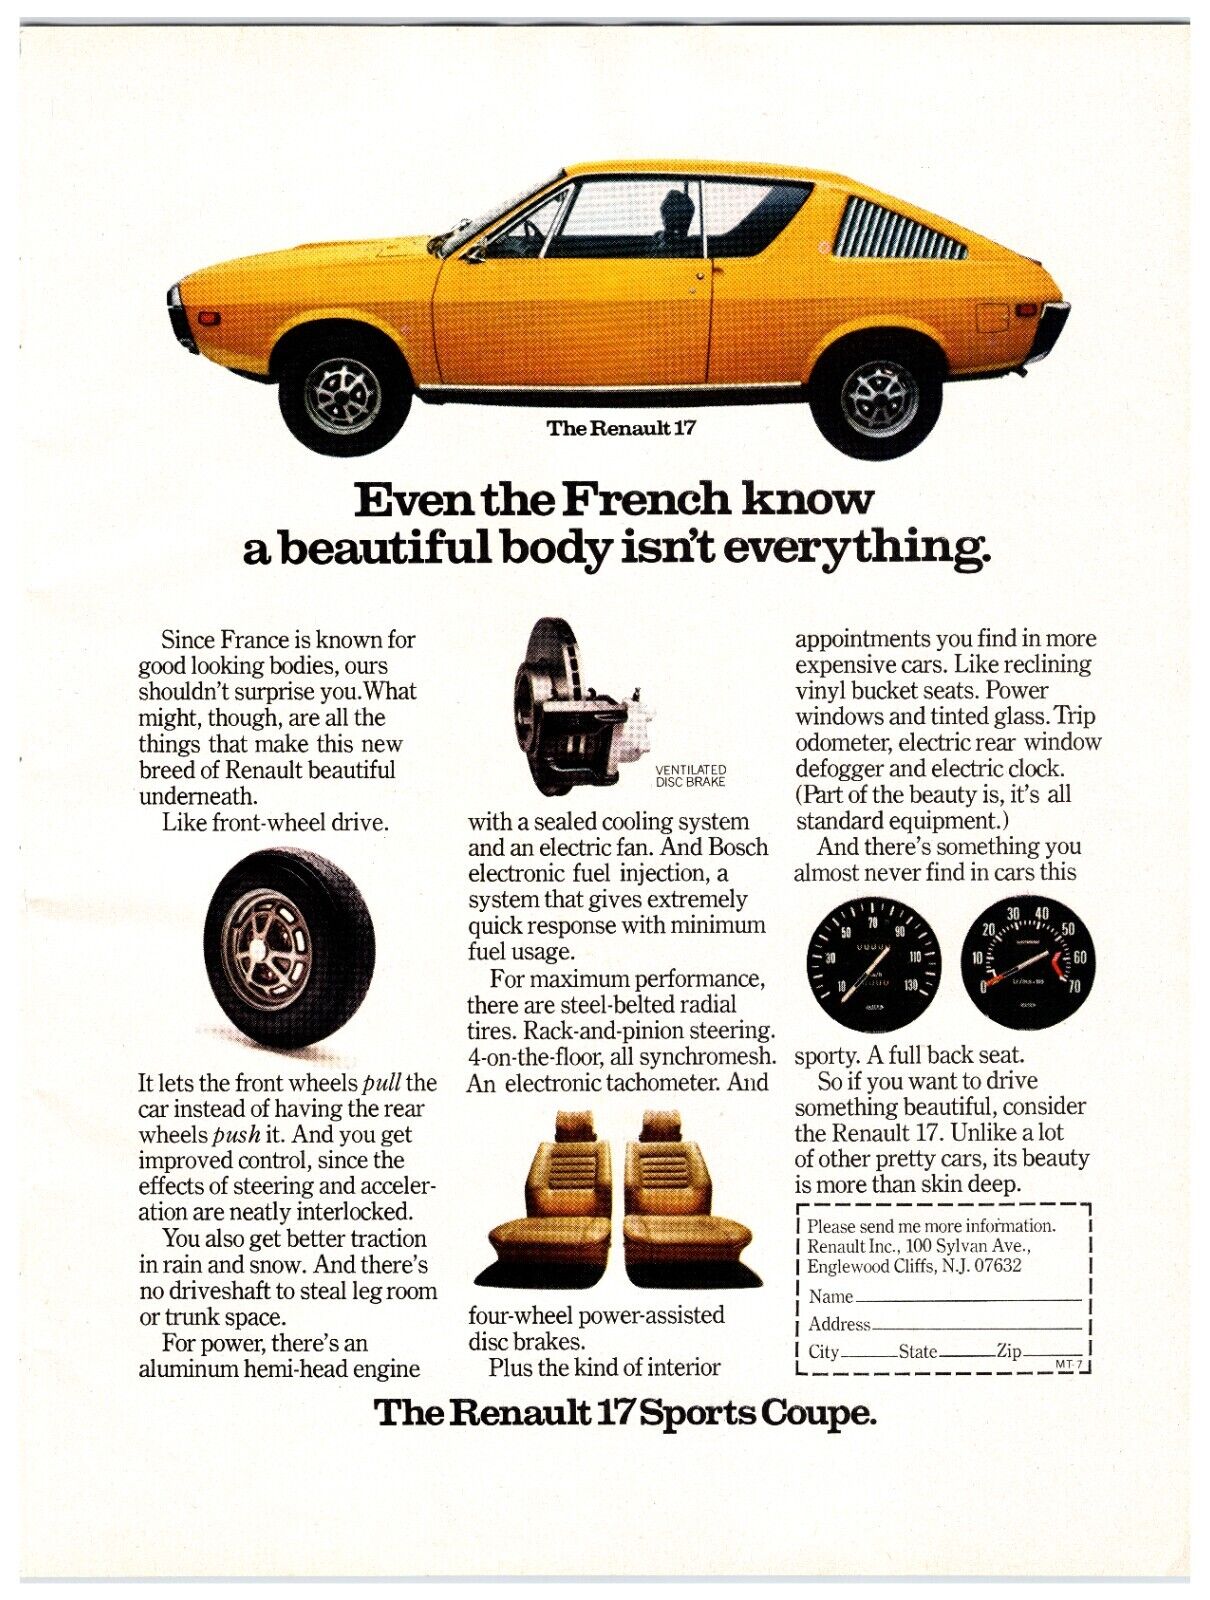 Original 1973 Renault 17 Car - Print Advertisement (8x11) *Vintage Original*